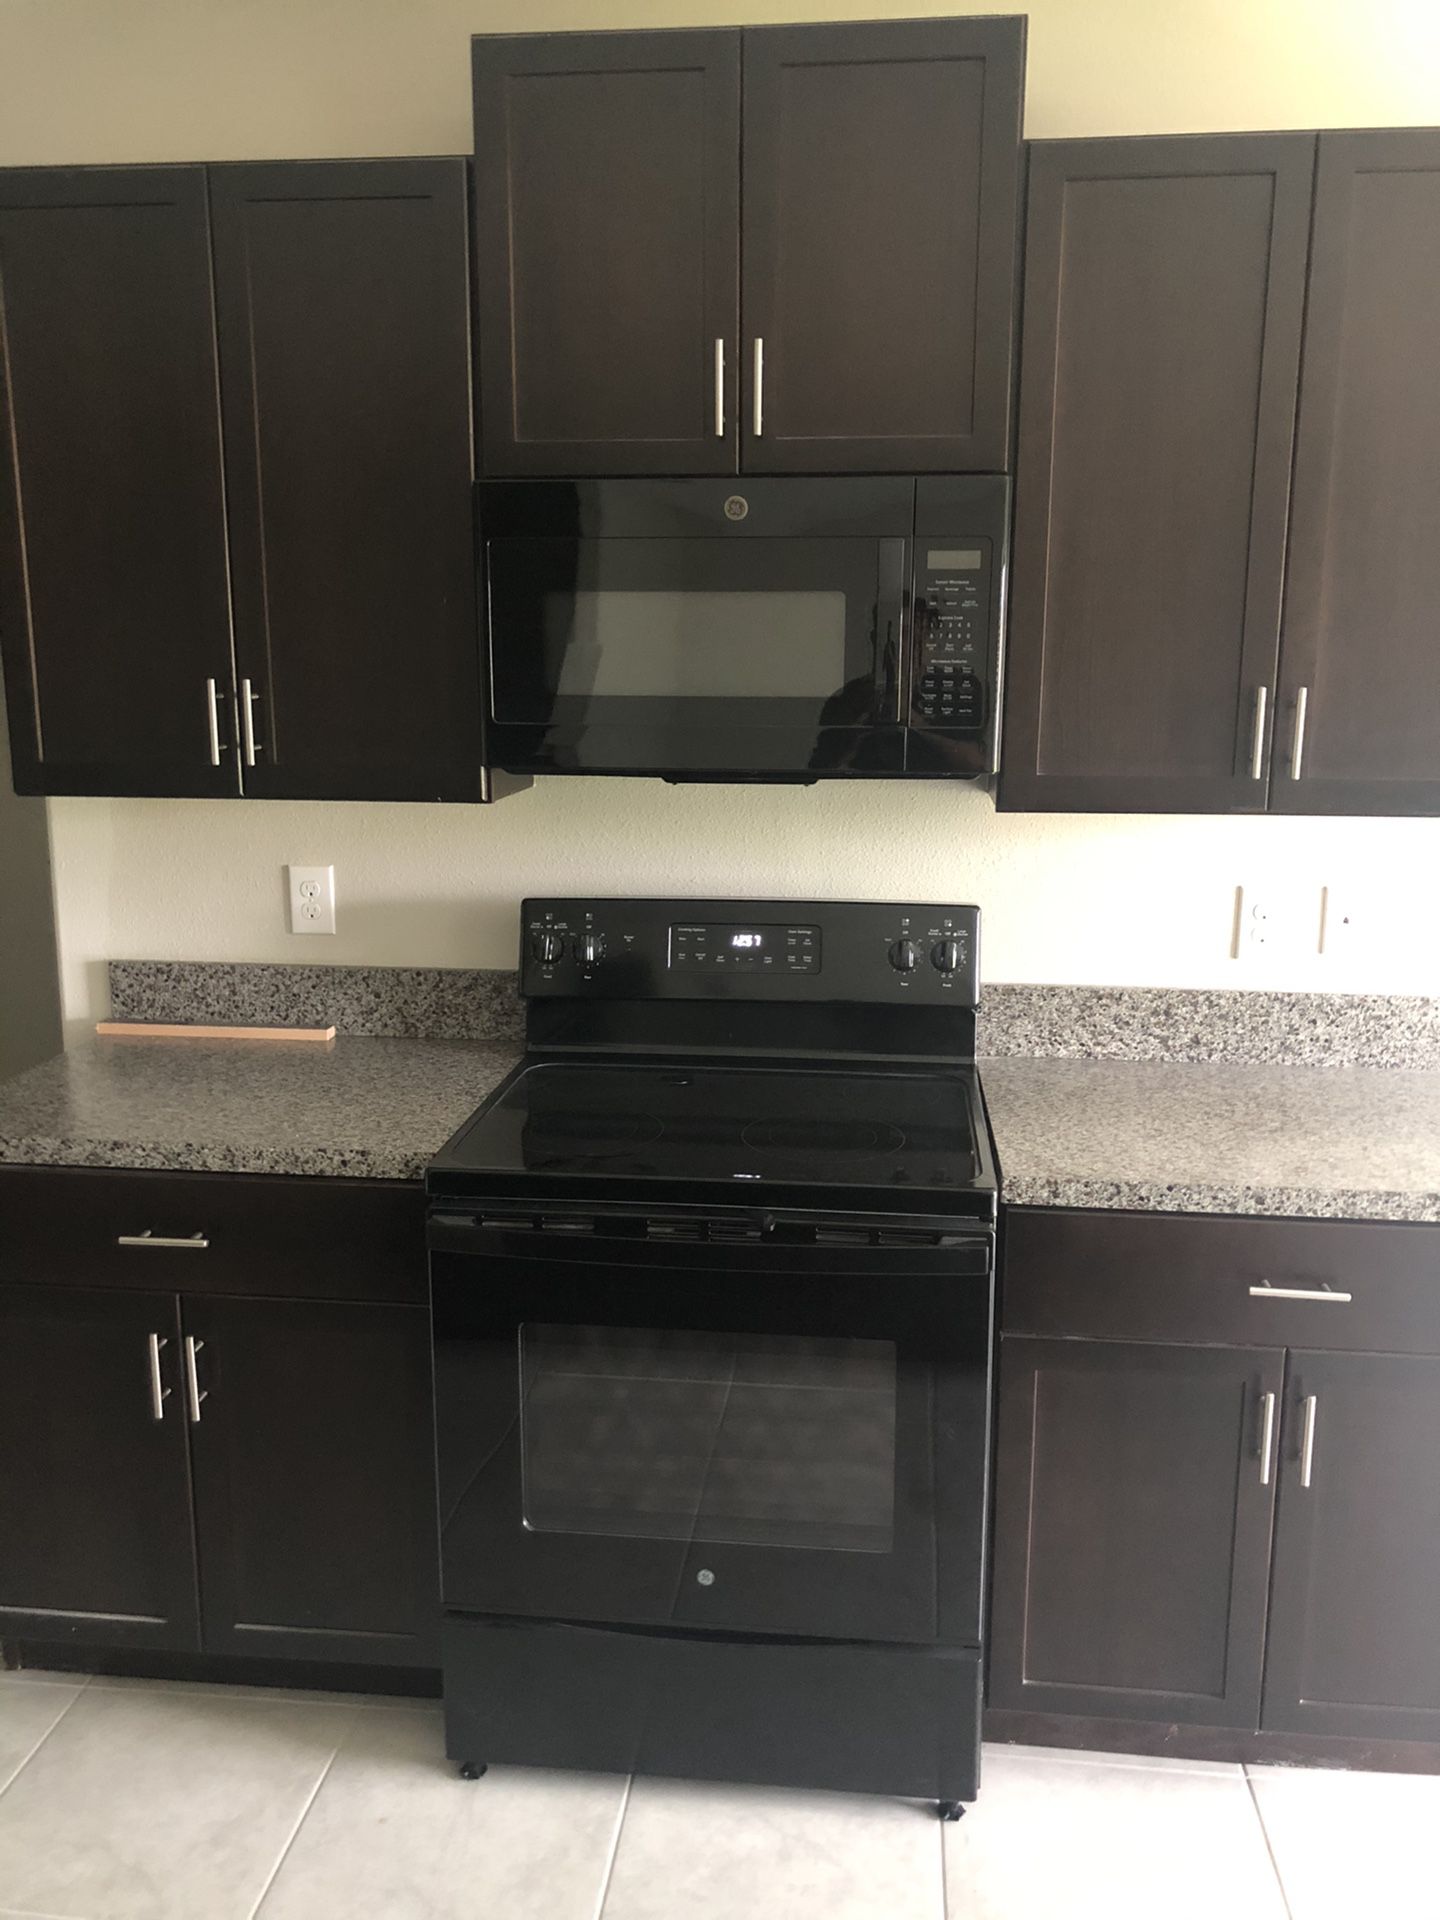 New black kitchen appliances all 4